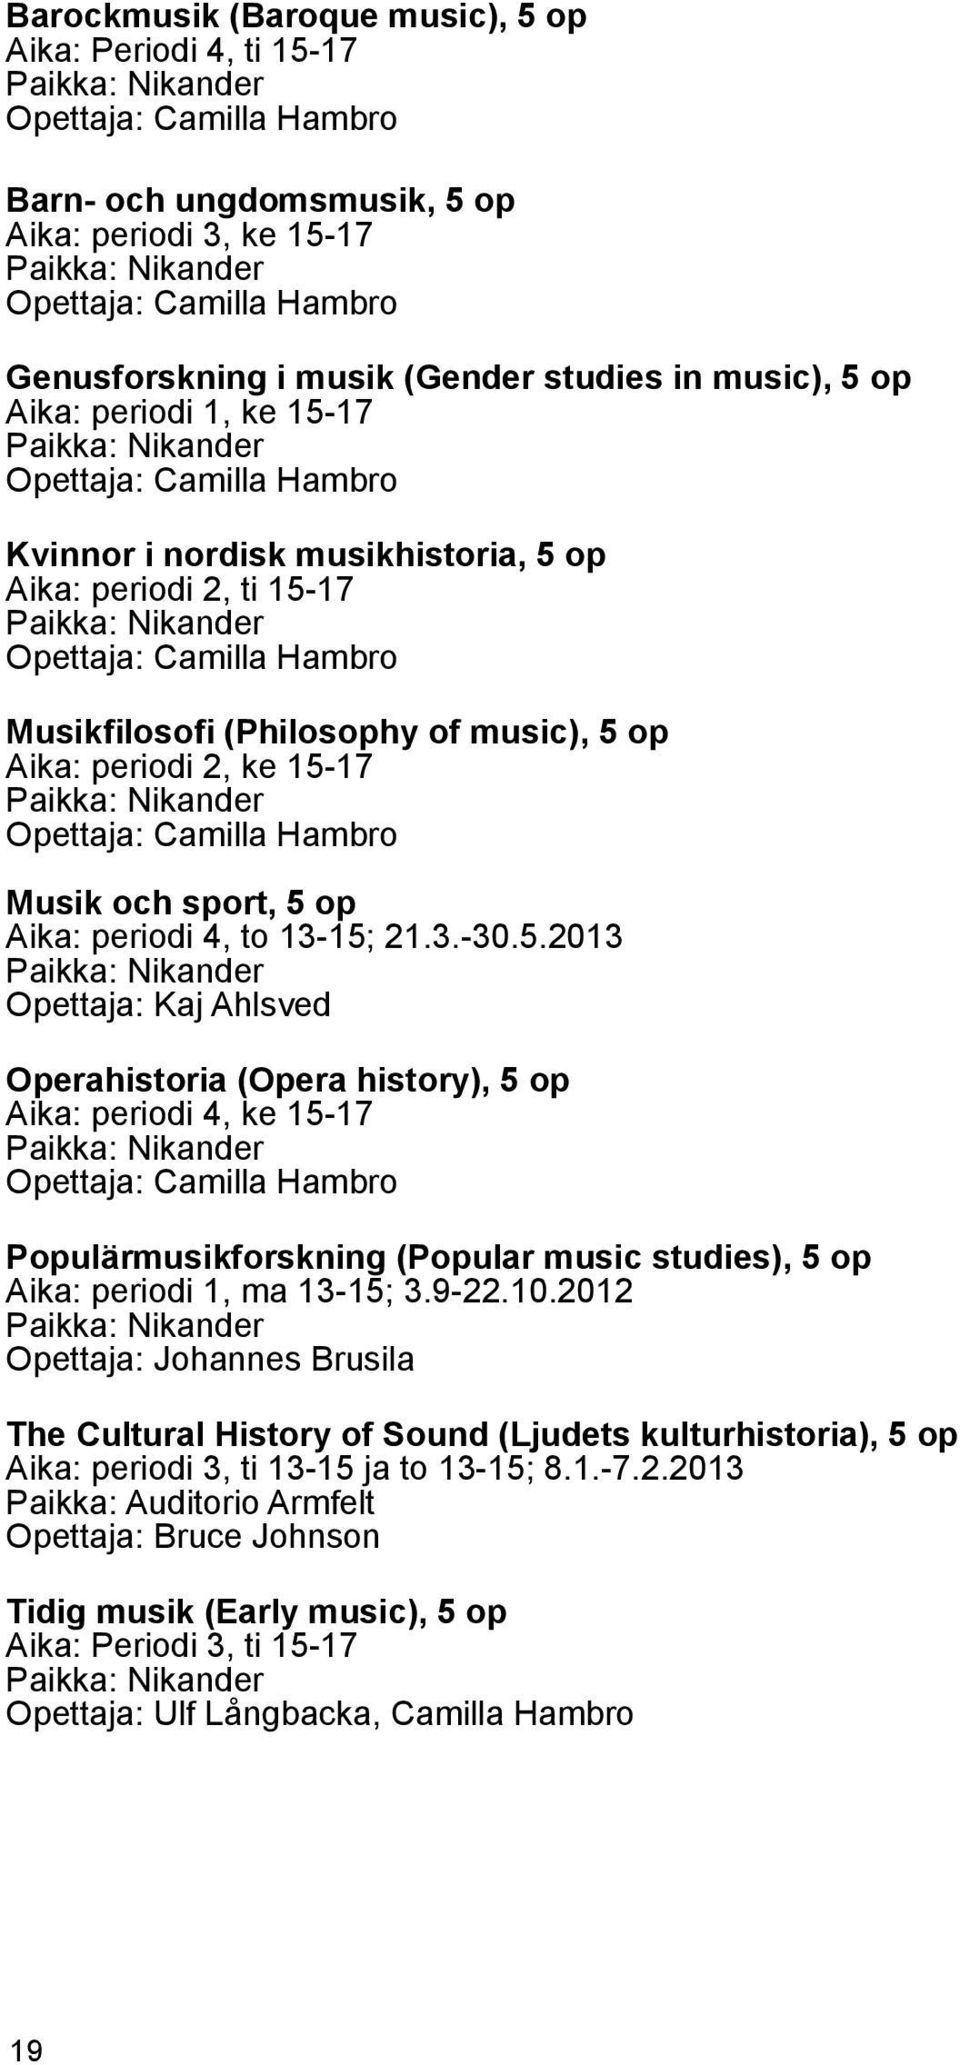 Nikander Opettaja: Camilla Hambro Musikfilosofi (Philosophy of music), 5 op Aika: periodi 2, ke 15-17 Paikka: Nikander Opettaja: Camilla Hambro Musik och sport, 5 op Aika: periodi 4, to 13-15; 21.3.-30.